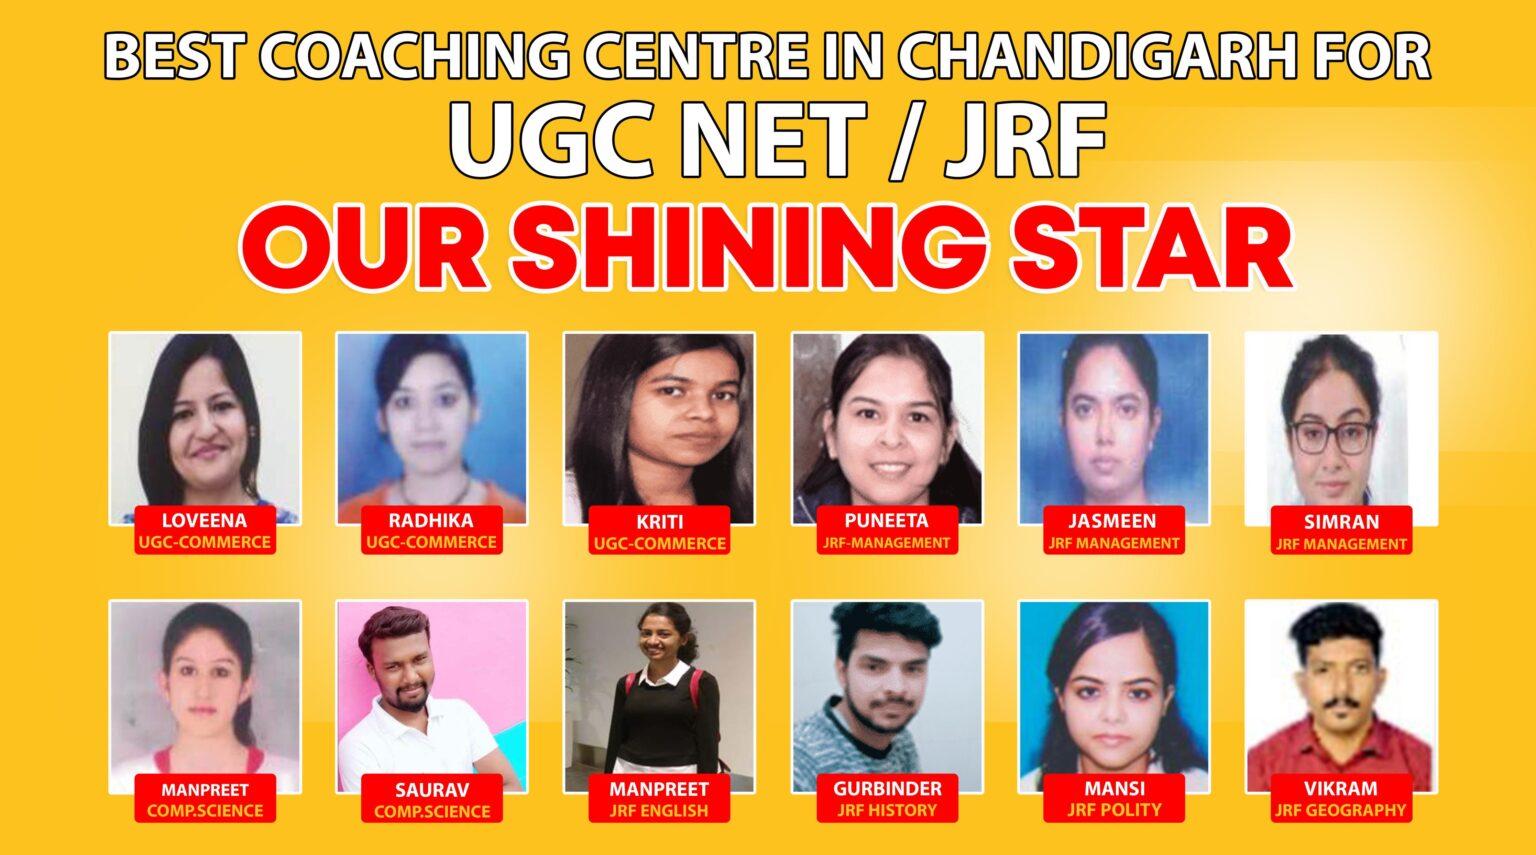 UGC NET Coaching in Chandigarh | Call @9888014545